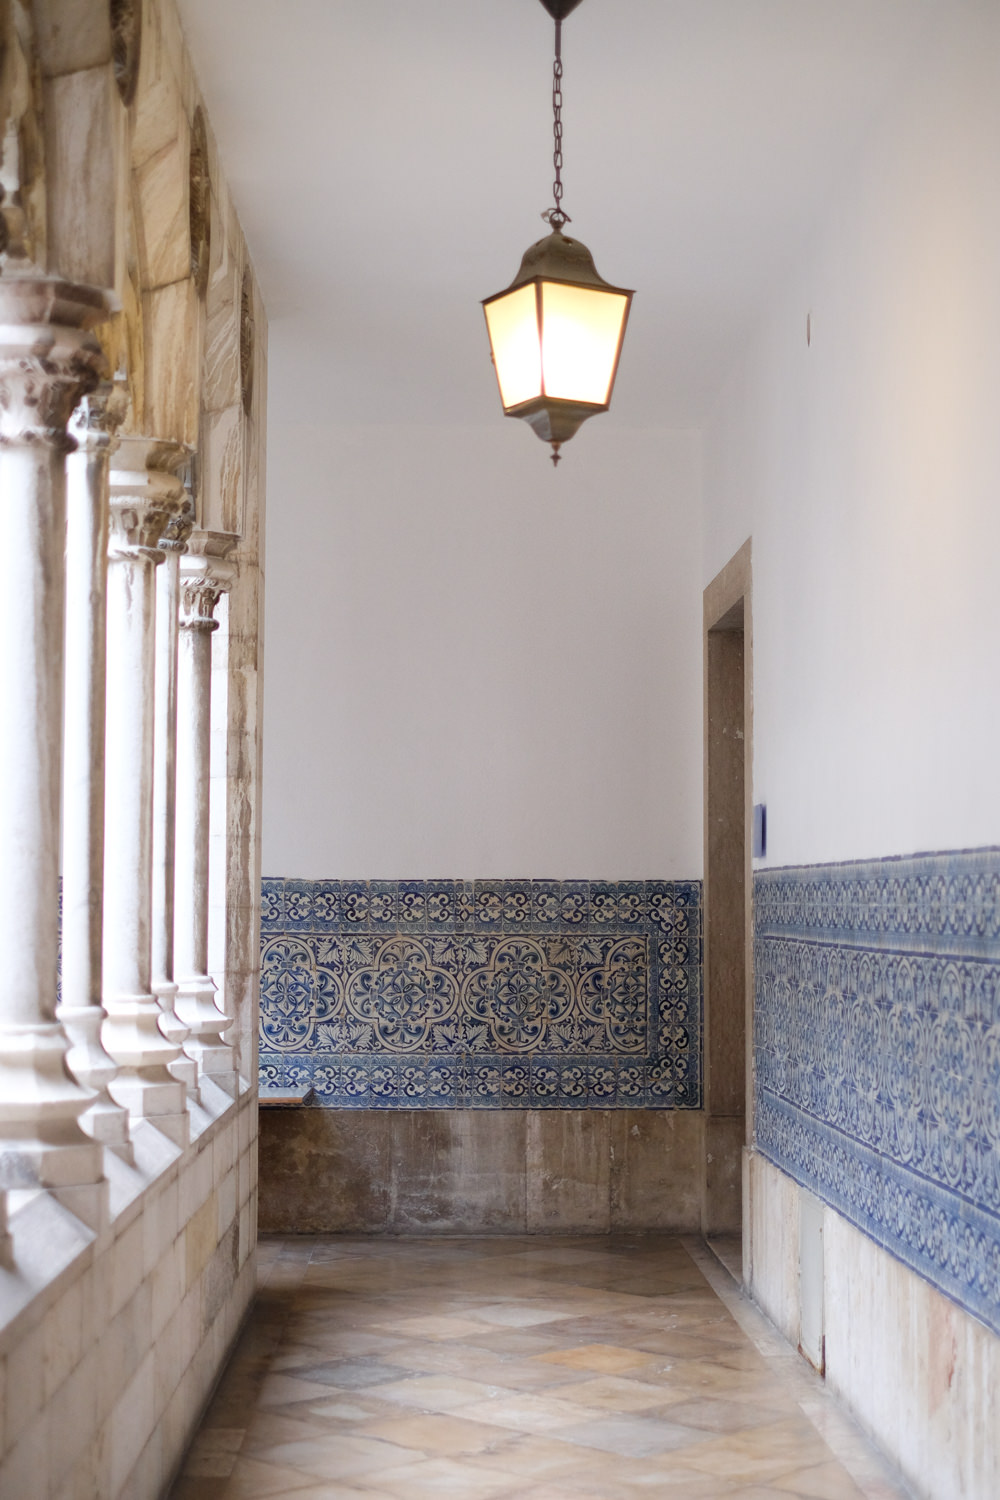 Lisbon azulejos